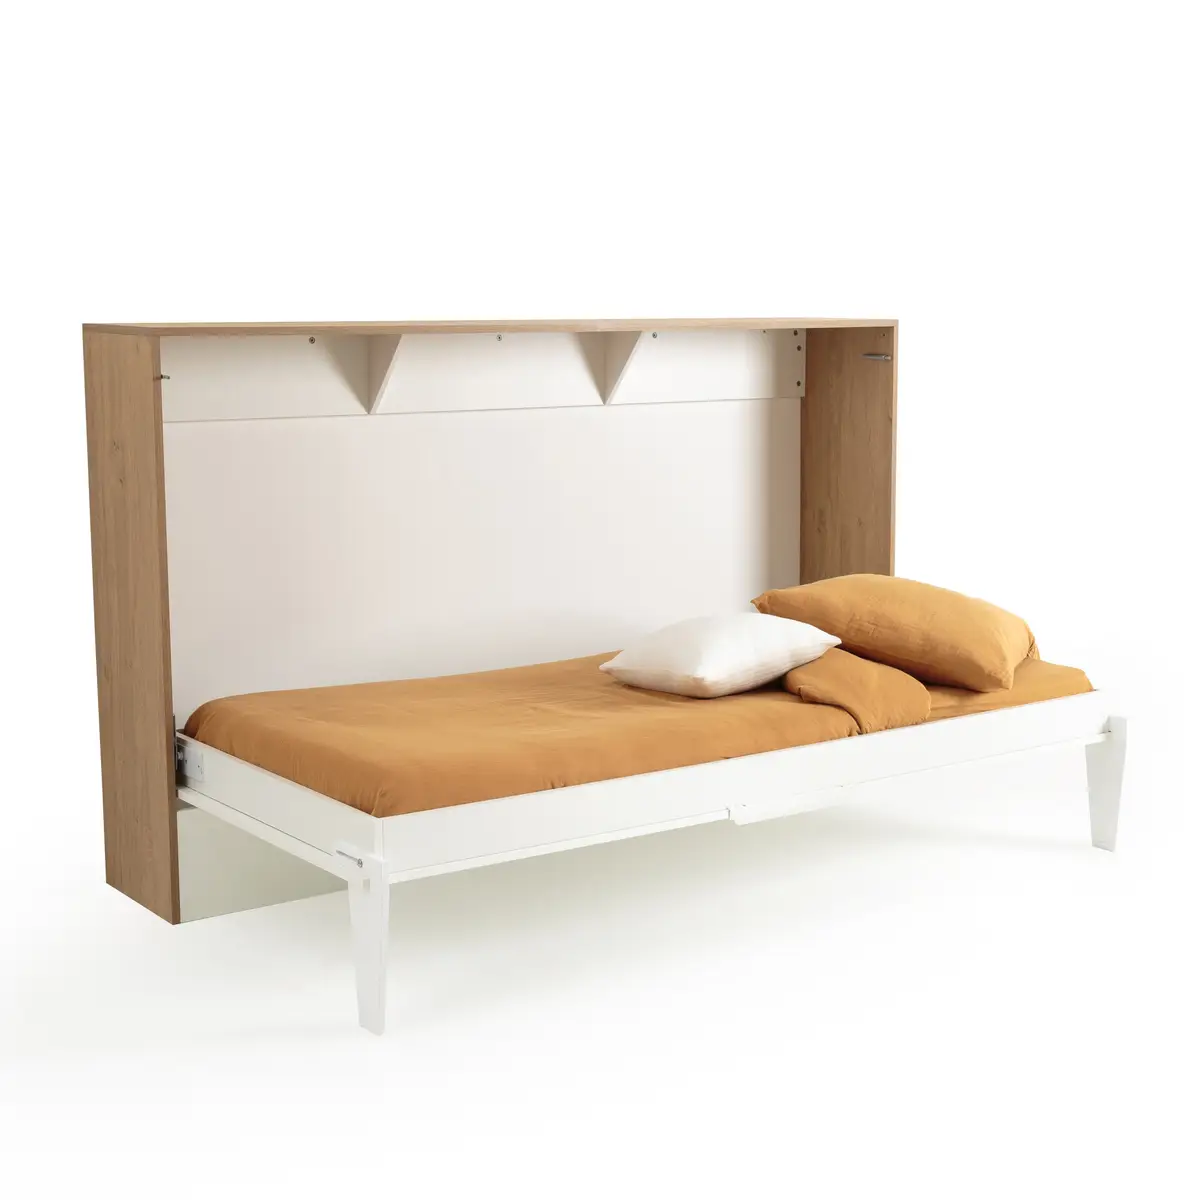 Design Storey: Beds